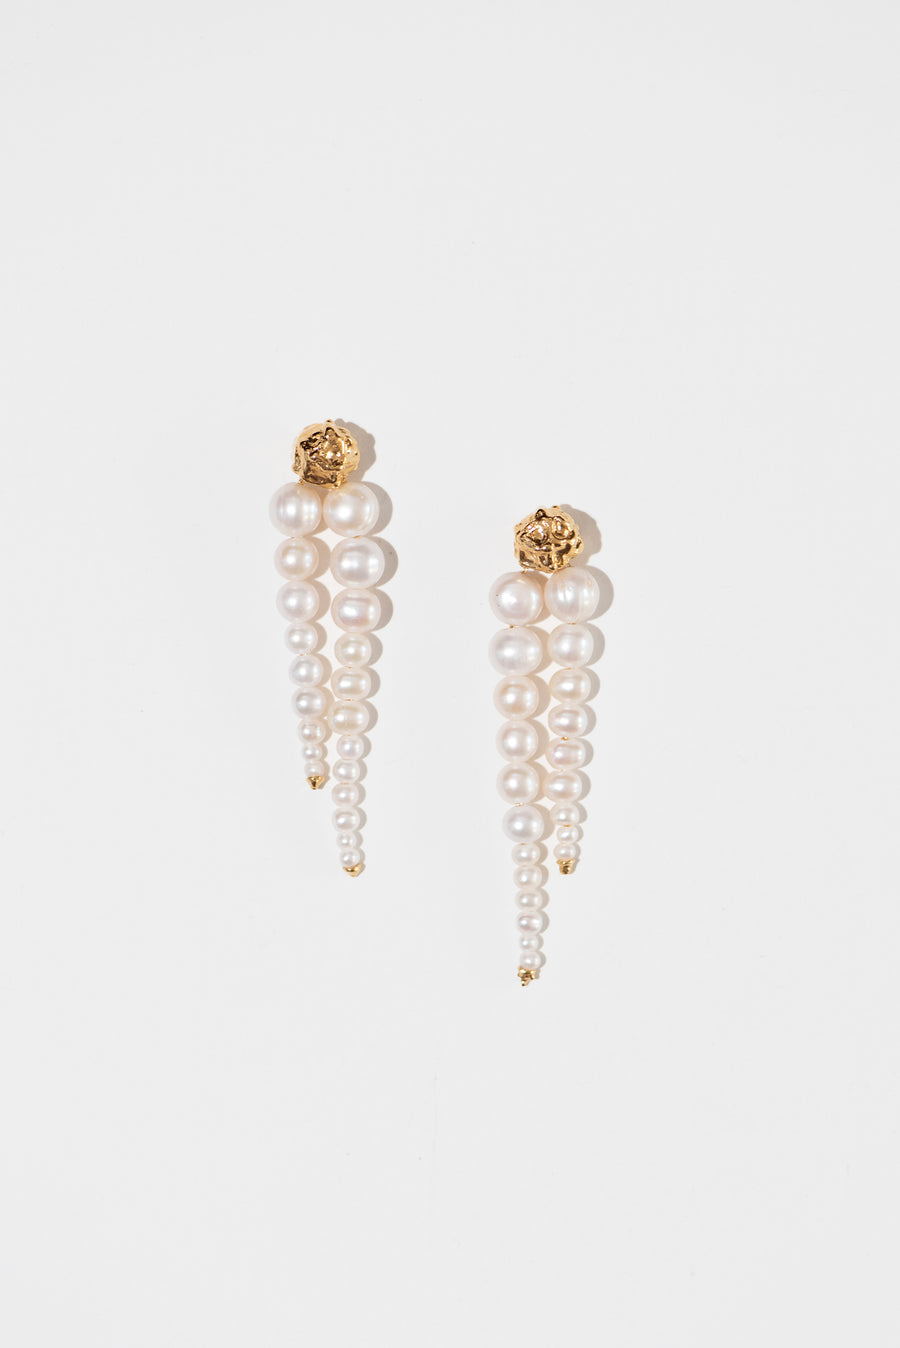 The Pearl Pearl Pearl Earring